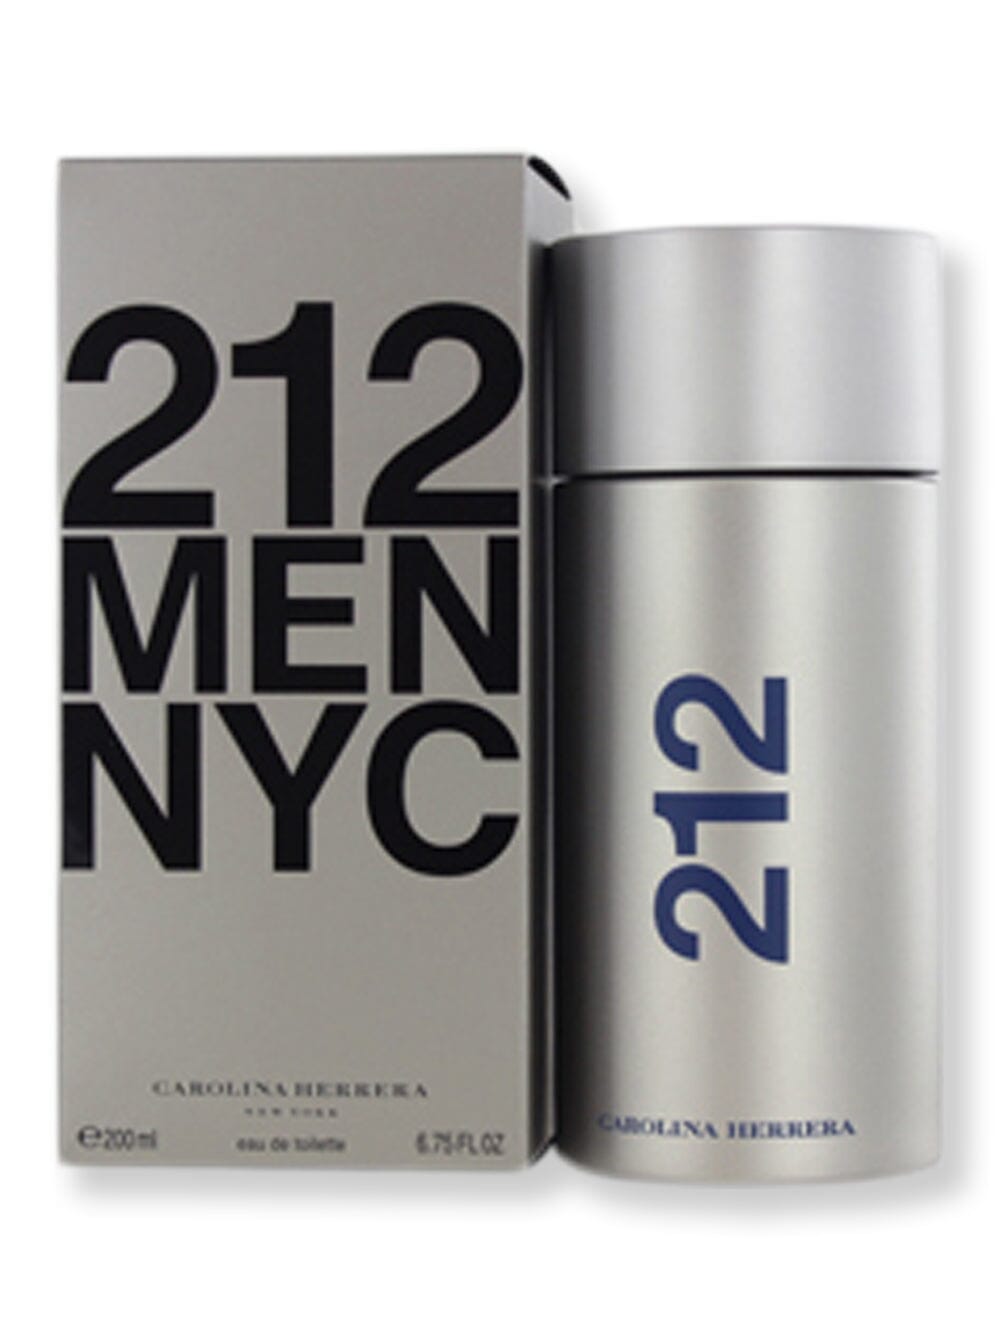 Carolina Herrera Carolina Herrera 212 NYC For Men EDT Spray 6.75 oz200 ml Perfume 